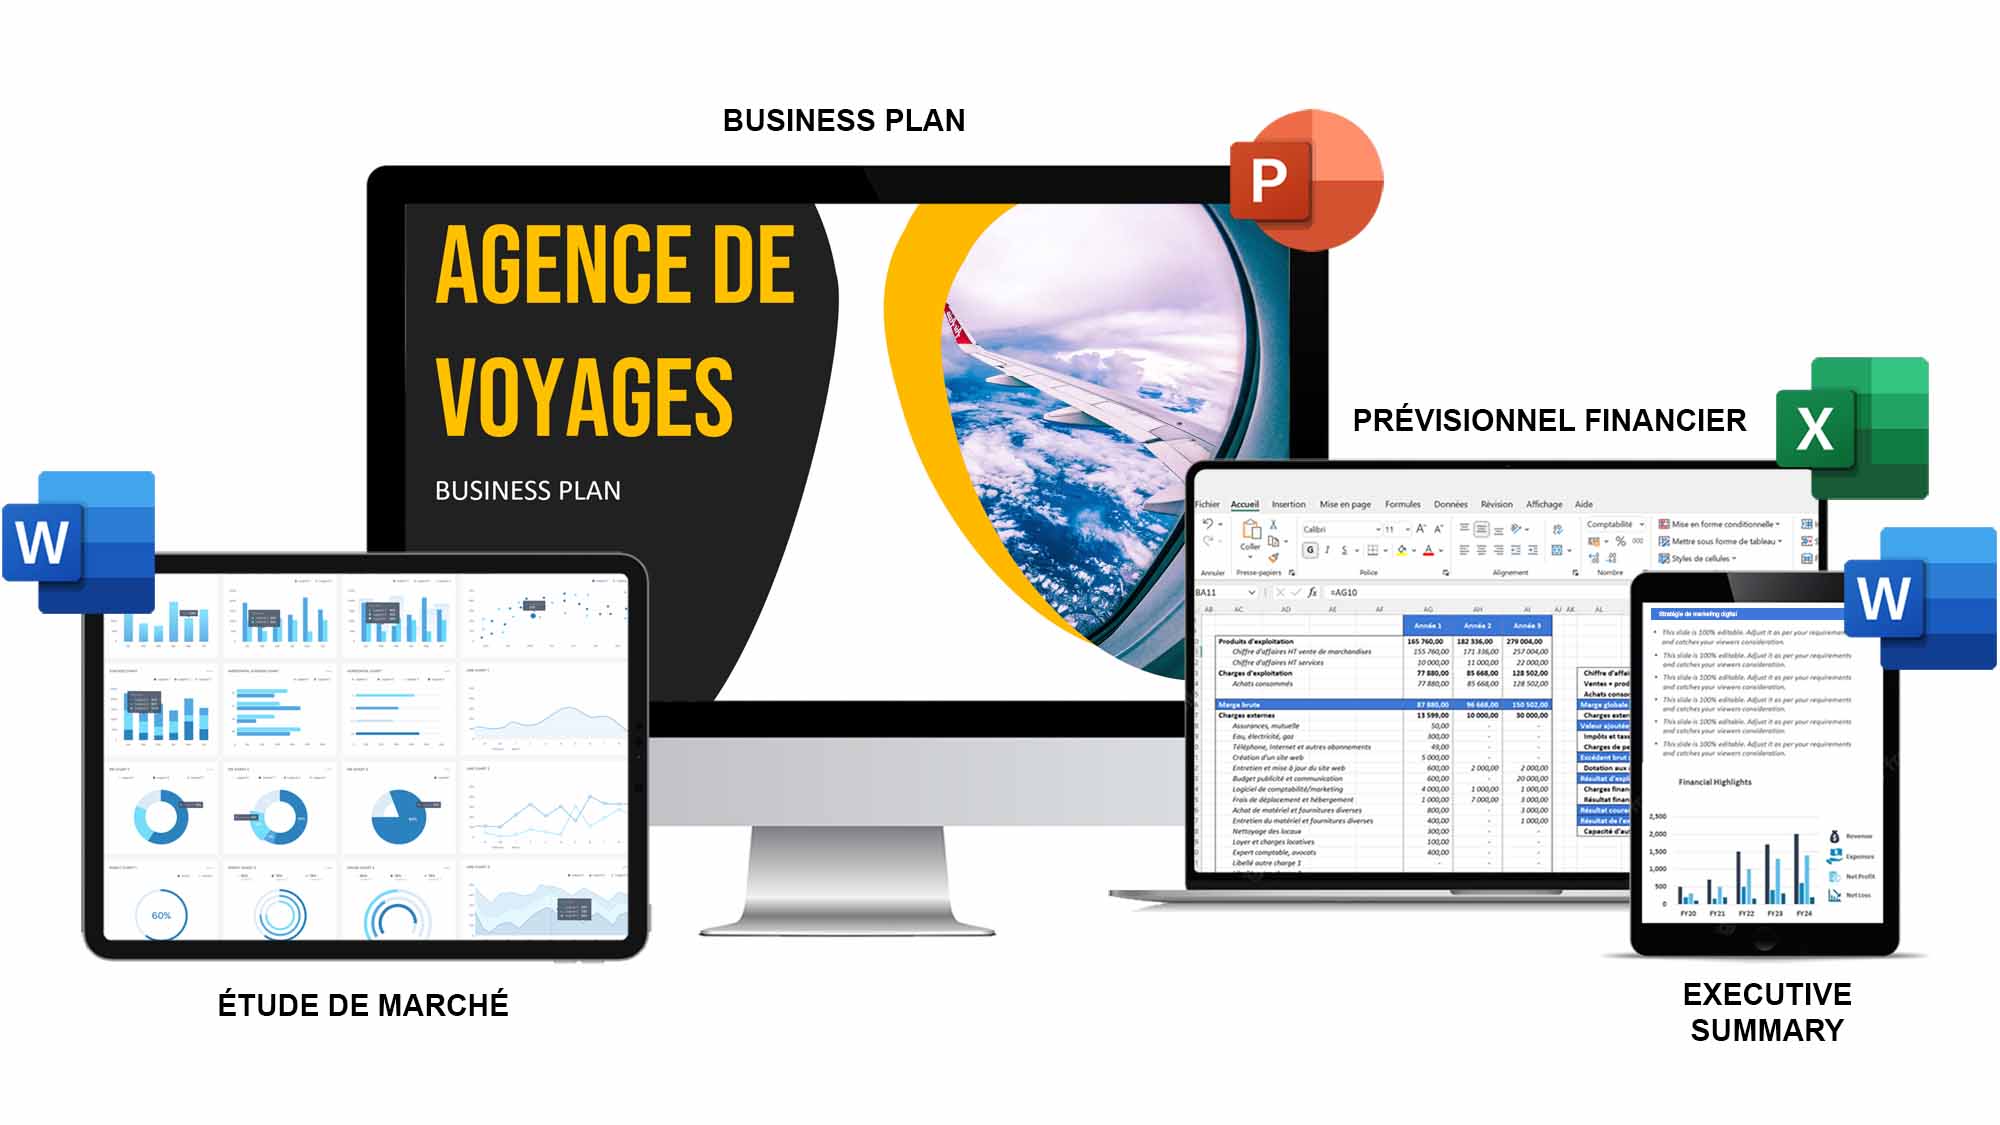 business plan agence de voyage pdf